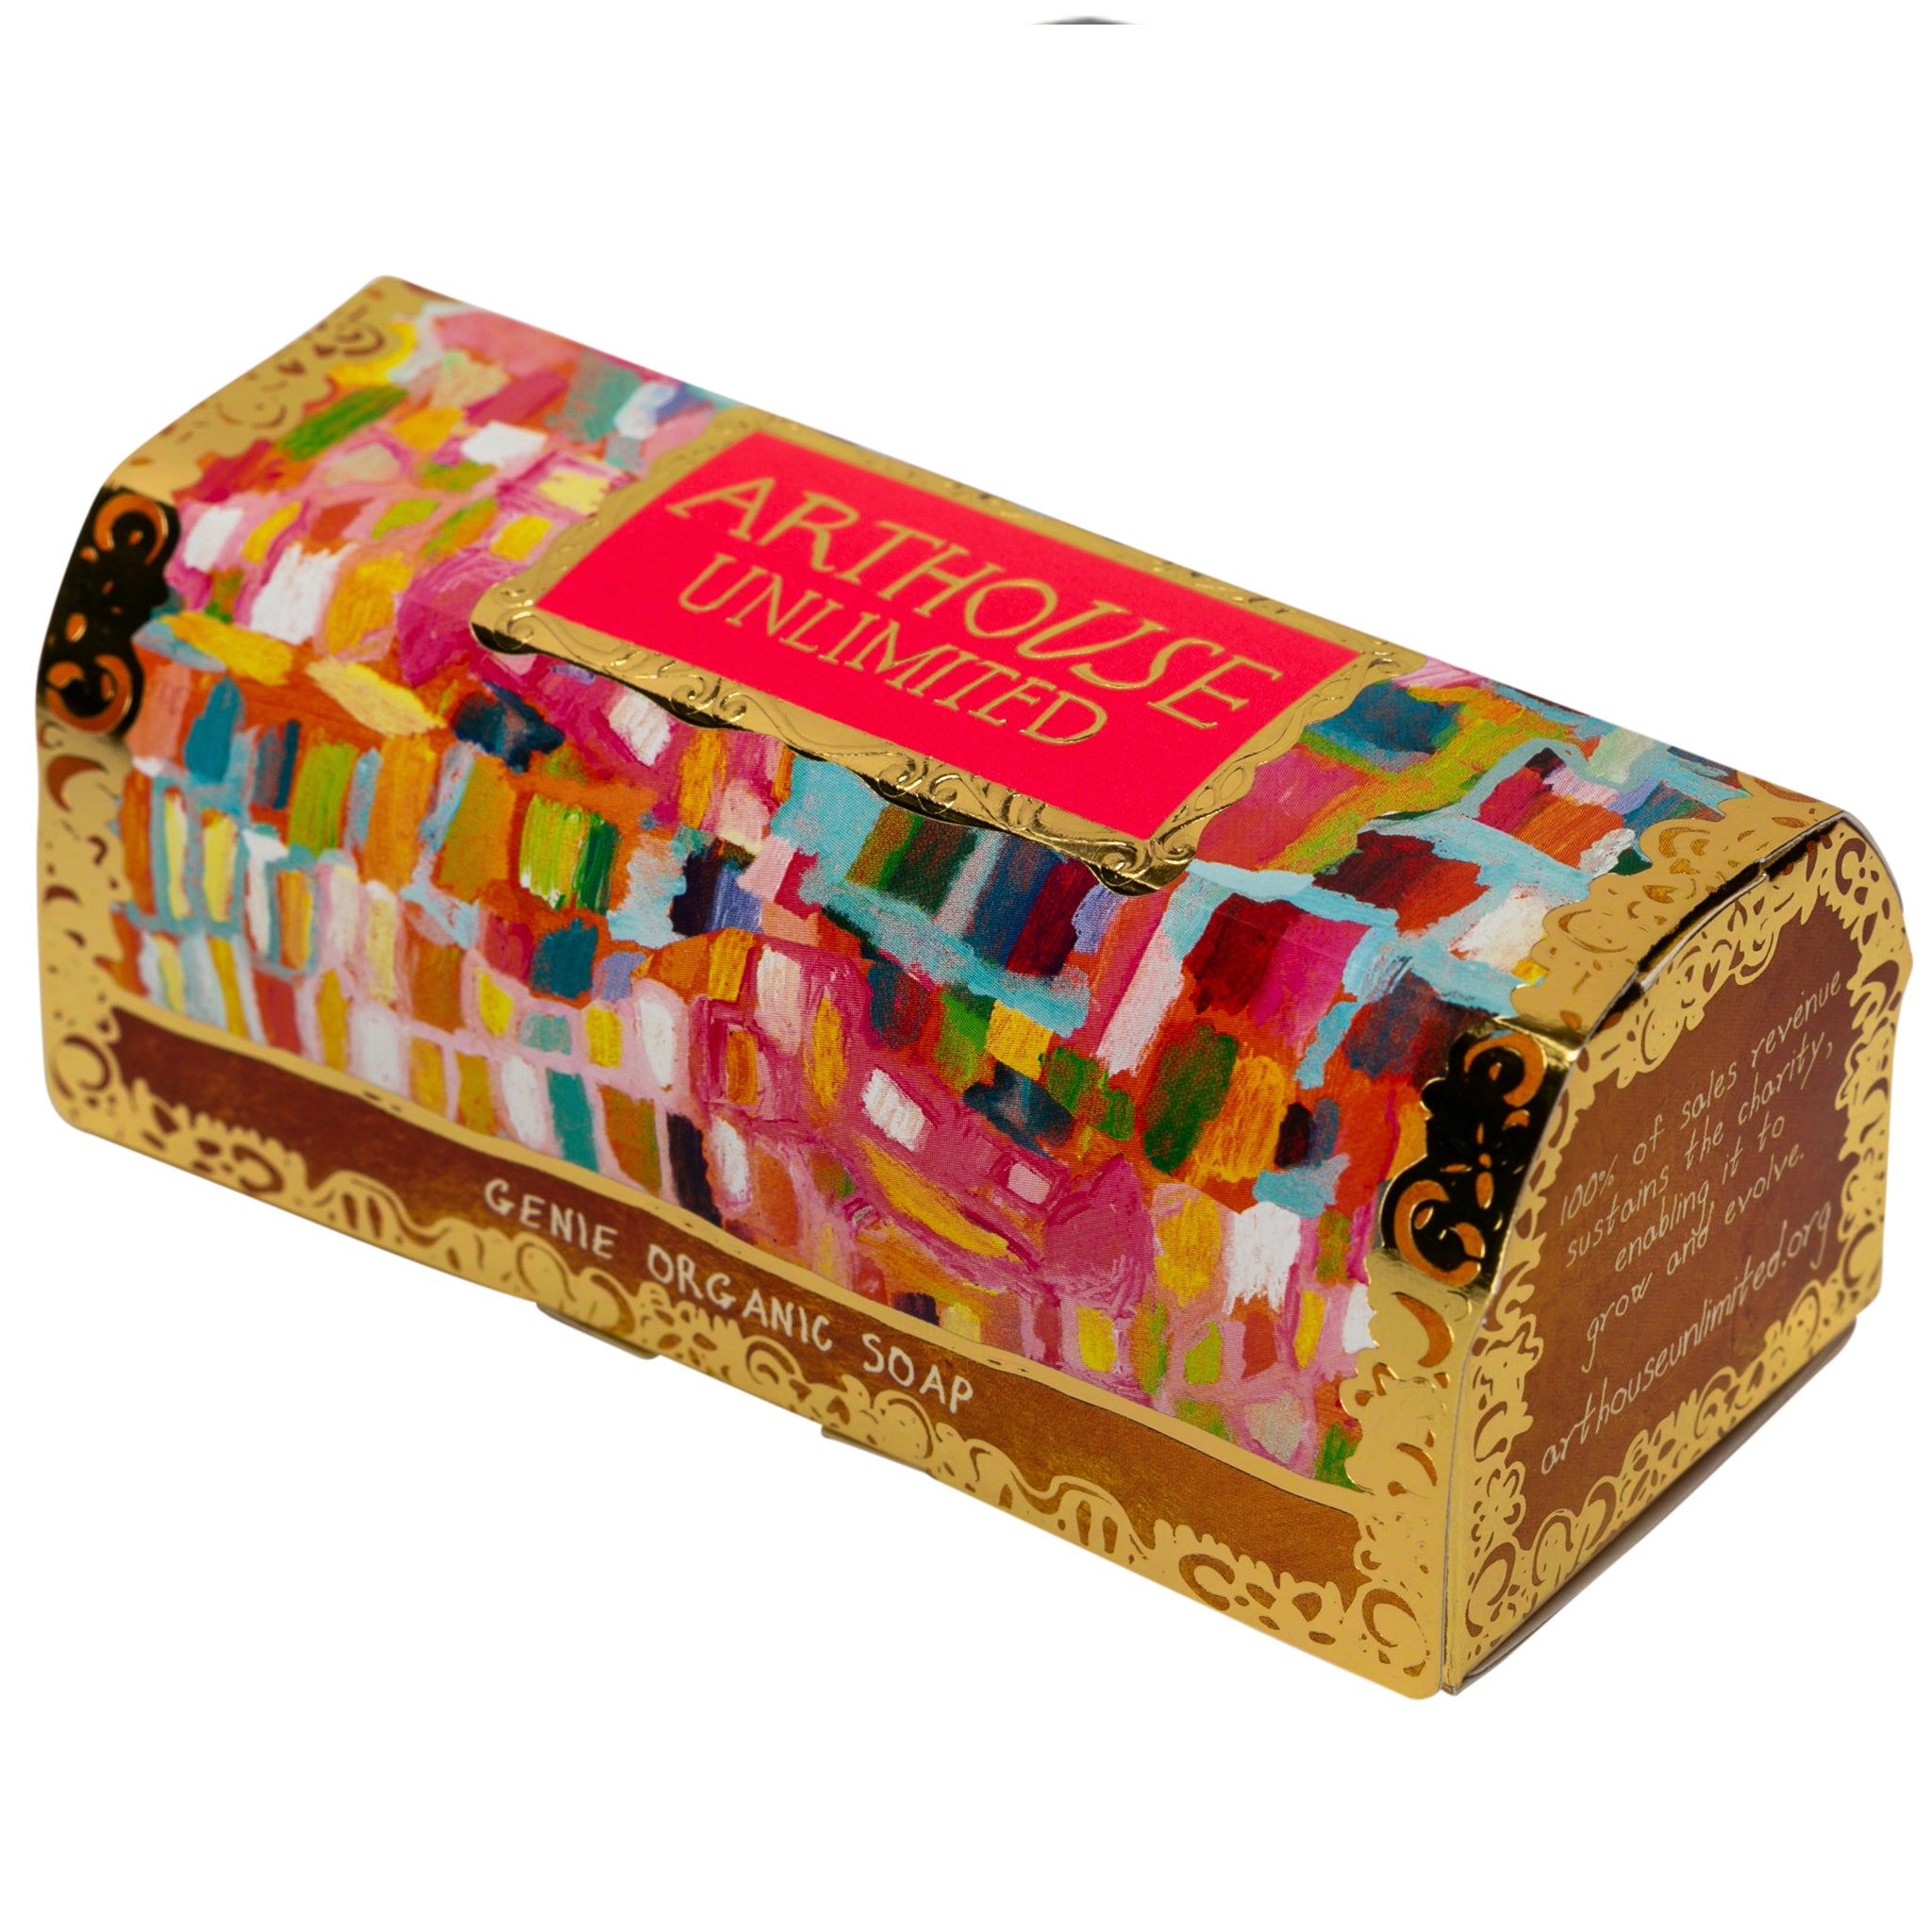 Genie, Triple Milled Organic Tubular Soap in bright coloured box